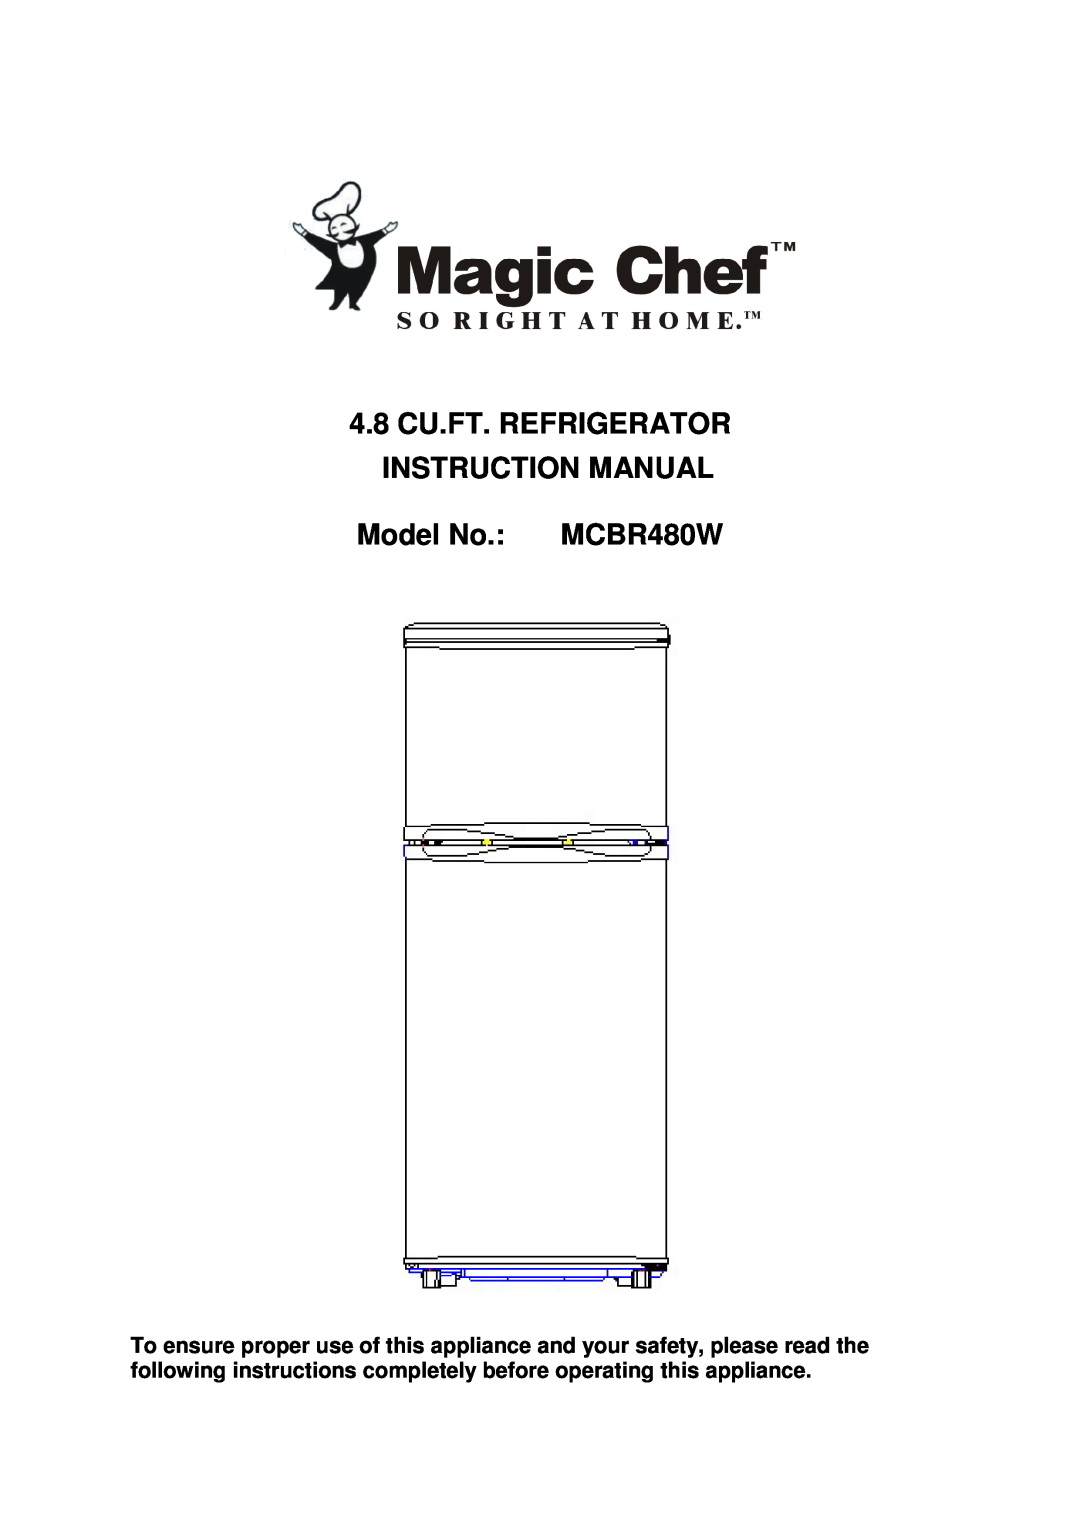 Magic Chef MCBR480W instruction manual 